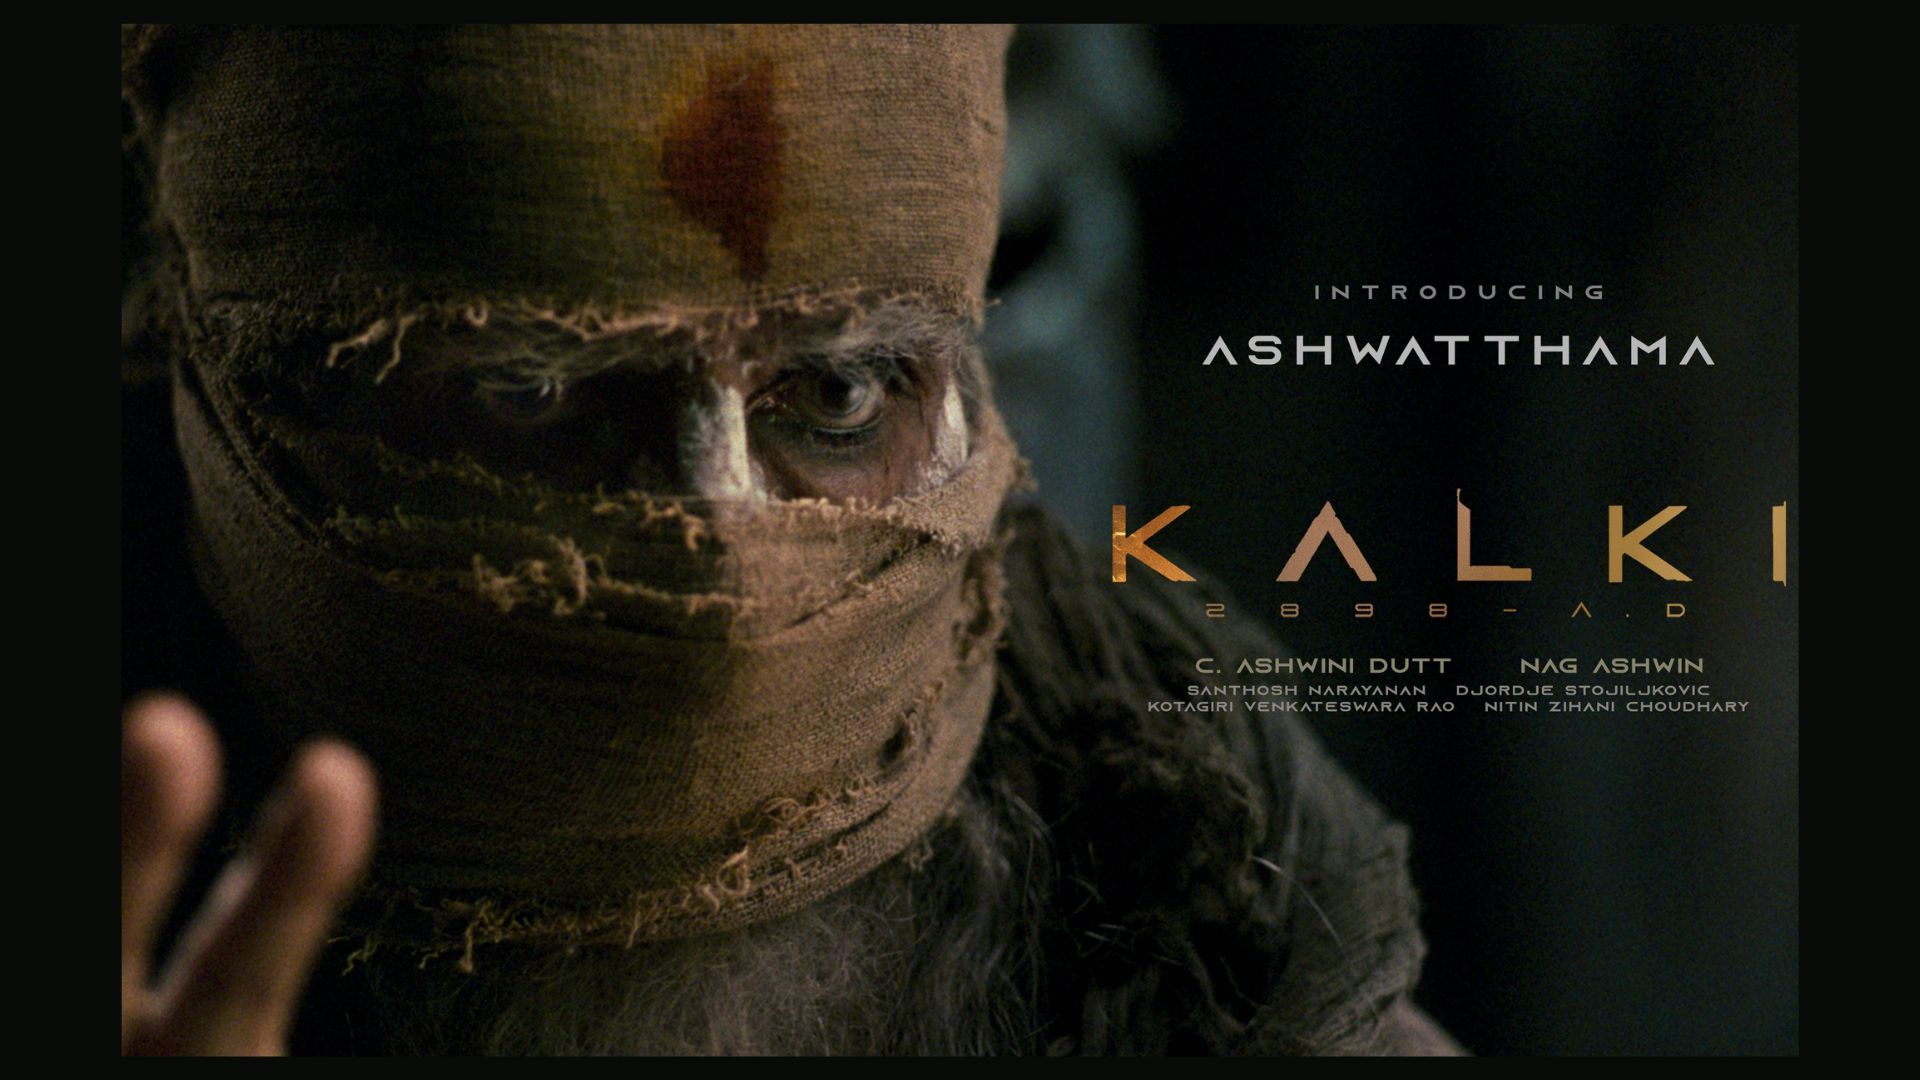 Kalki 2898 AD Update: Amitabh Bachchan's portrayal of Ashwtthama in Kalki 2898 AD is truly impressive.